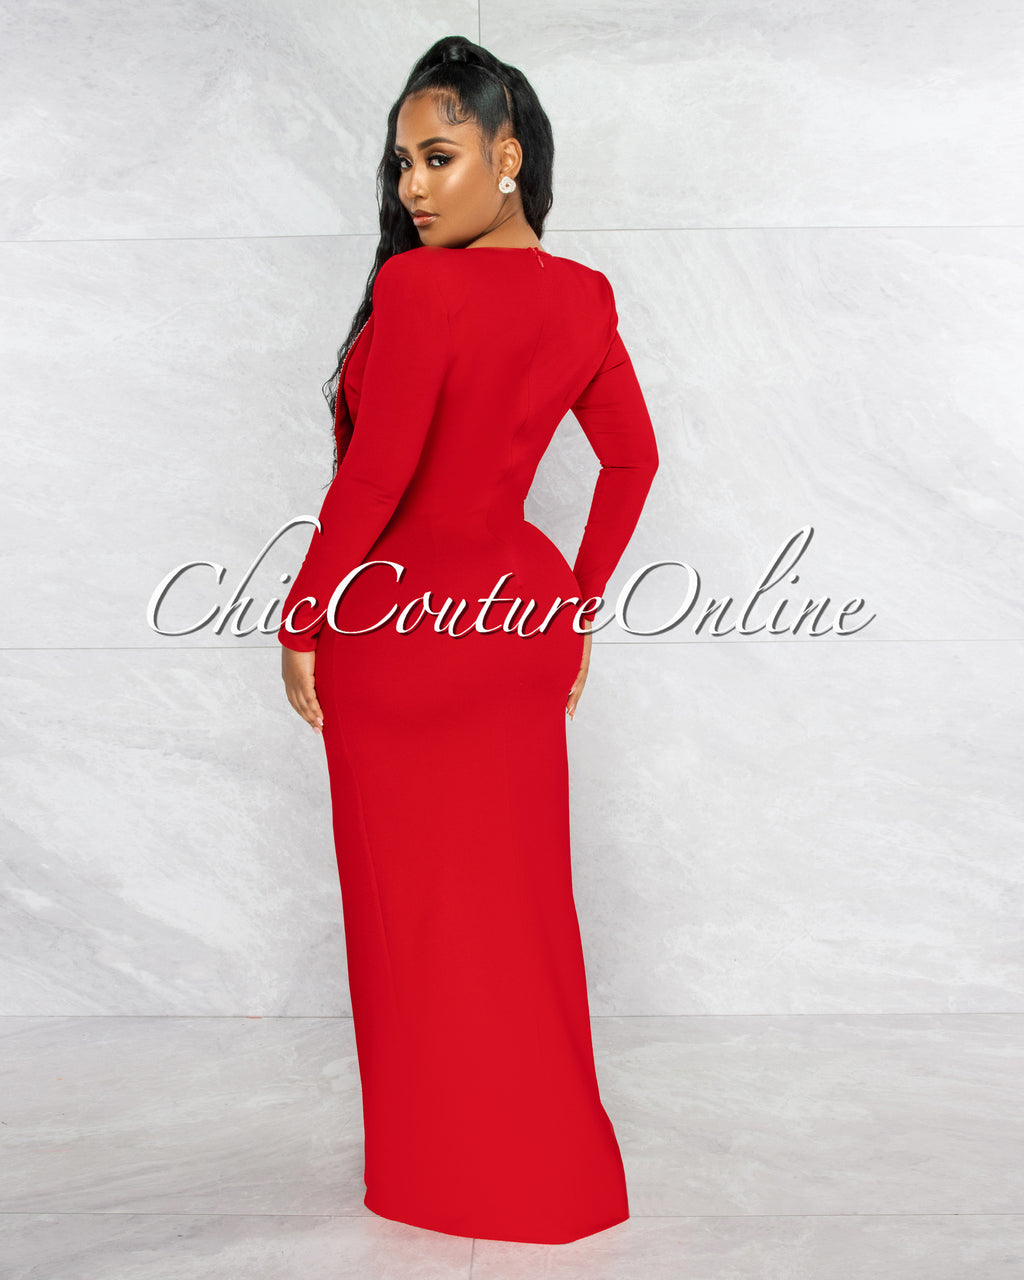 Marlinda Red Bodysuit Rhinestone Embellished Dress Set